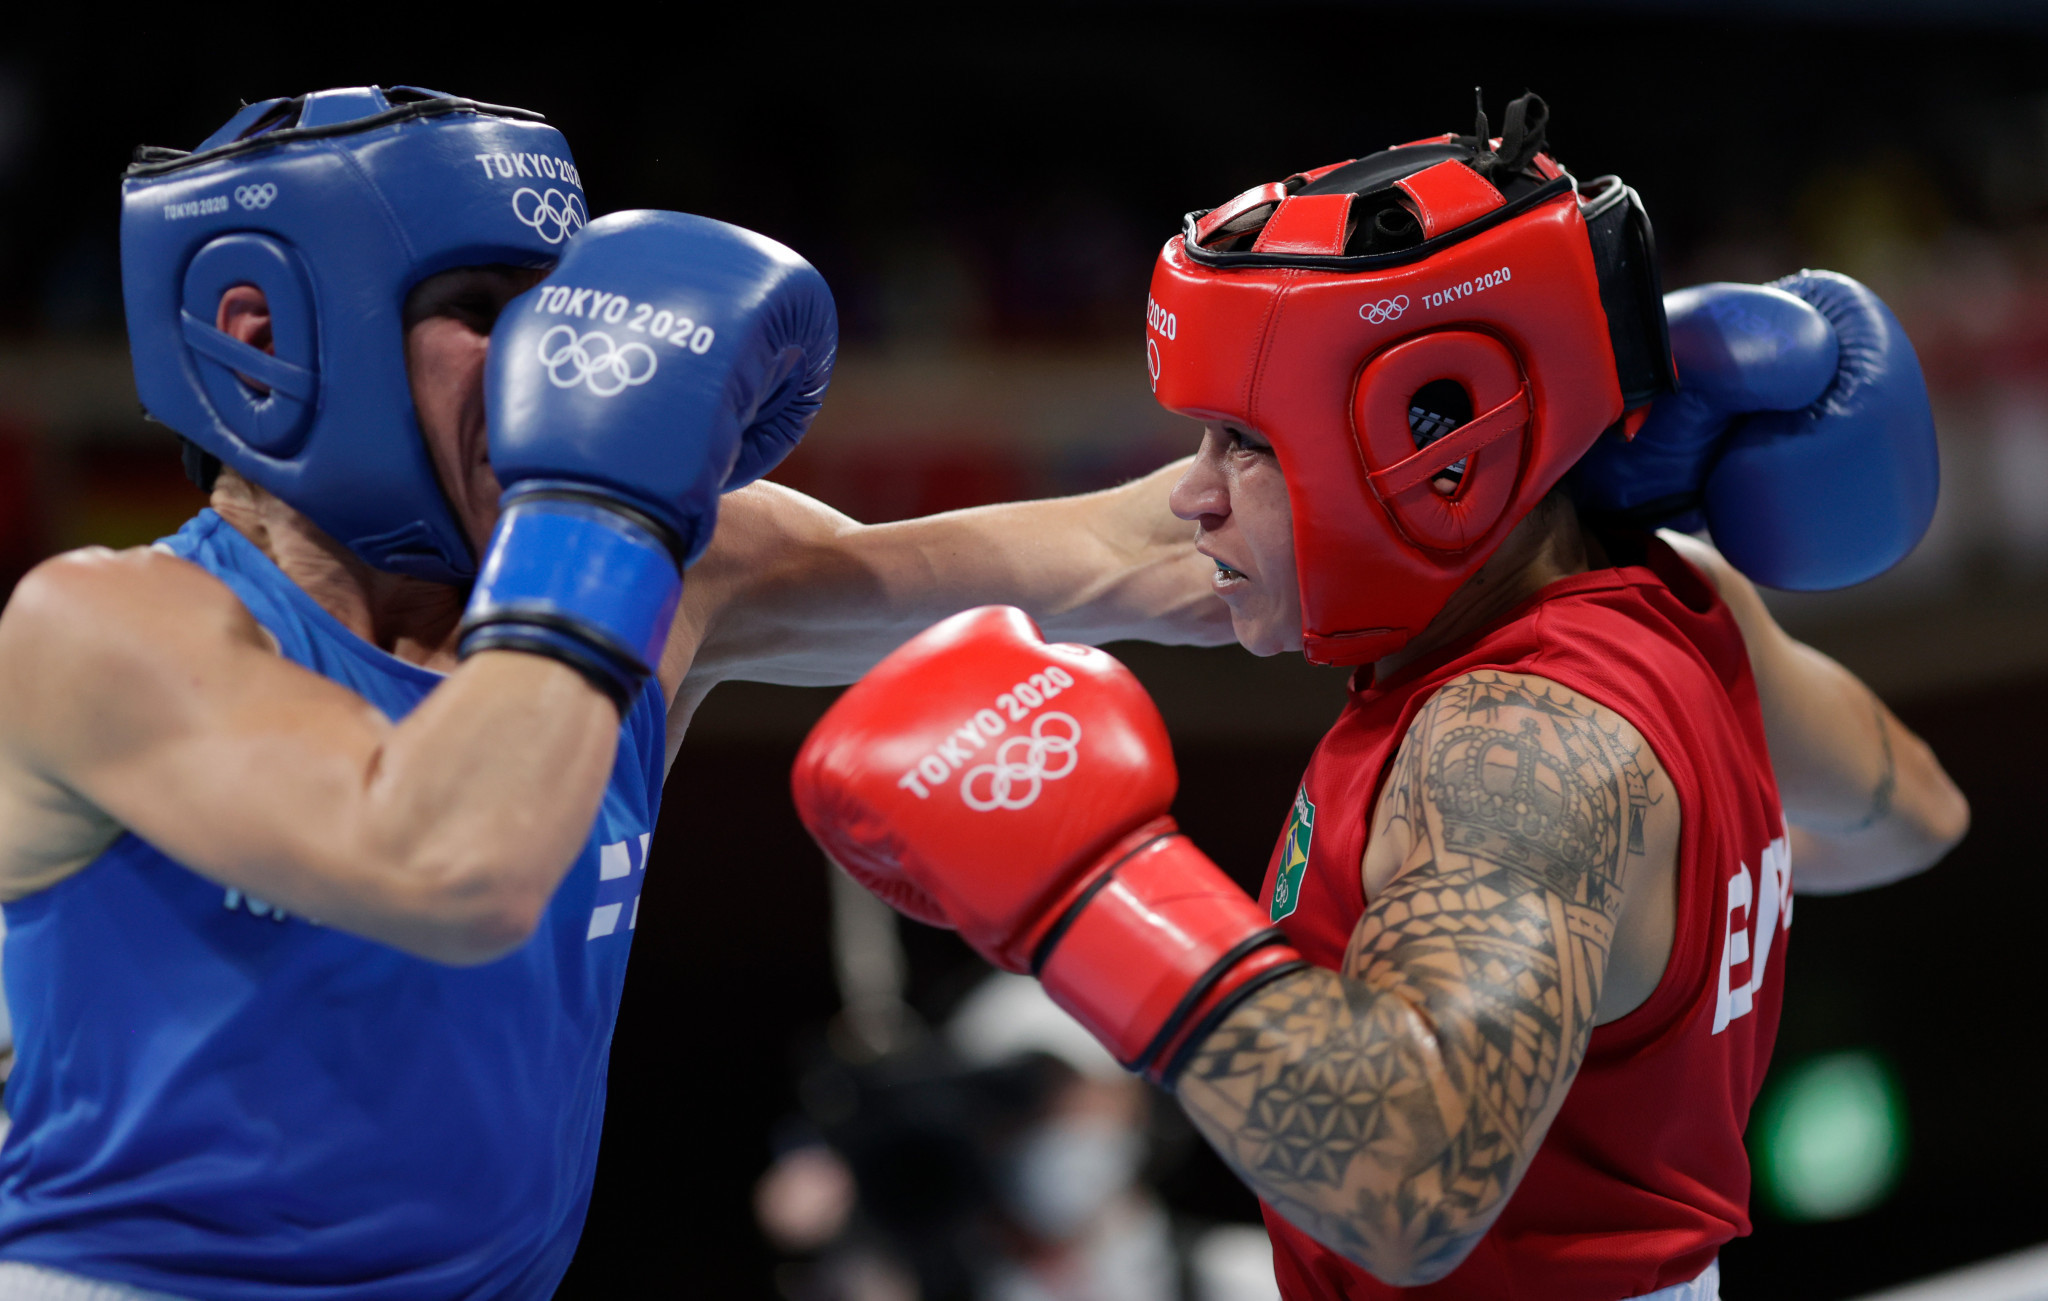 EUBC President slams plan to have as many women boxers as men at Paris 2024 Olympics